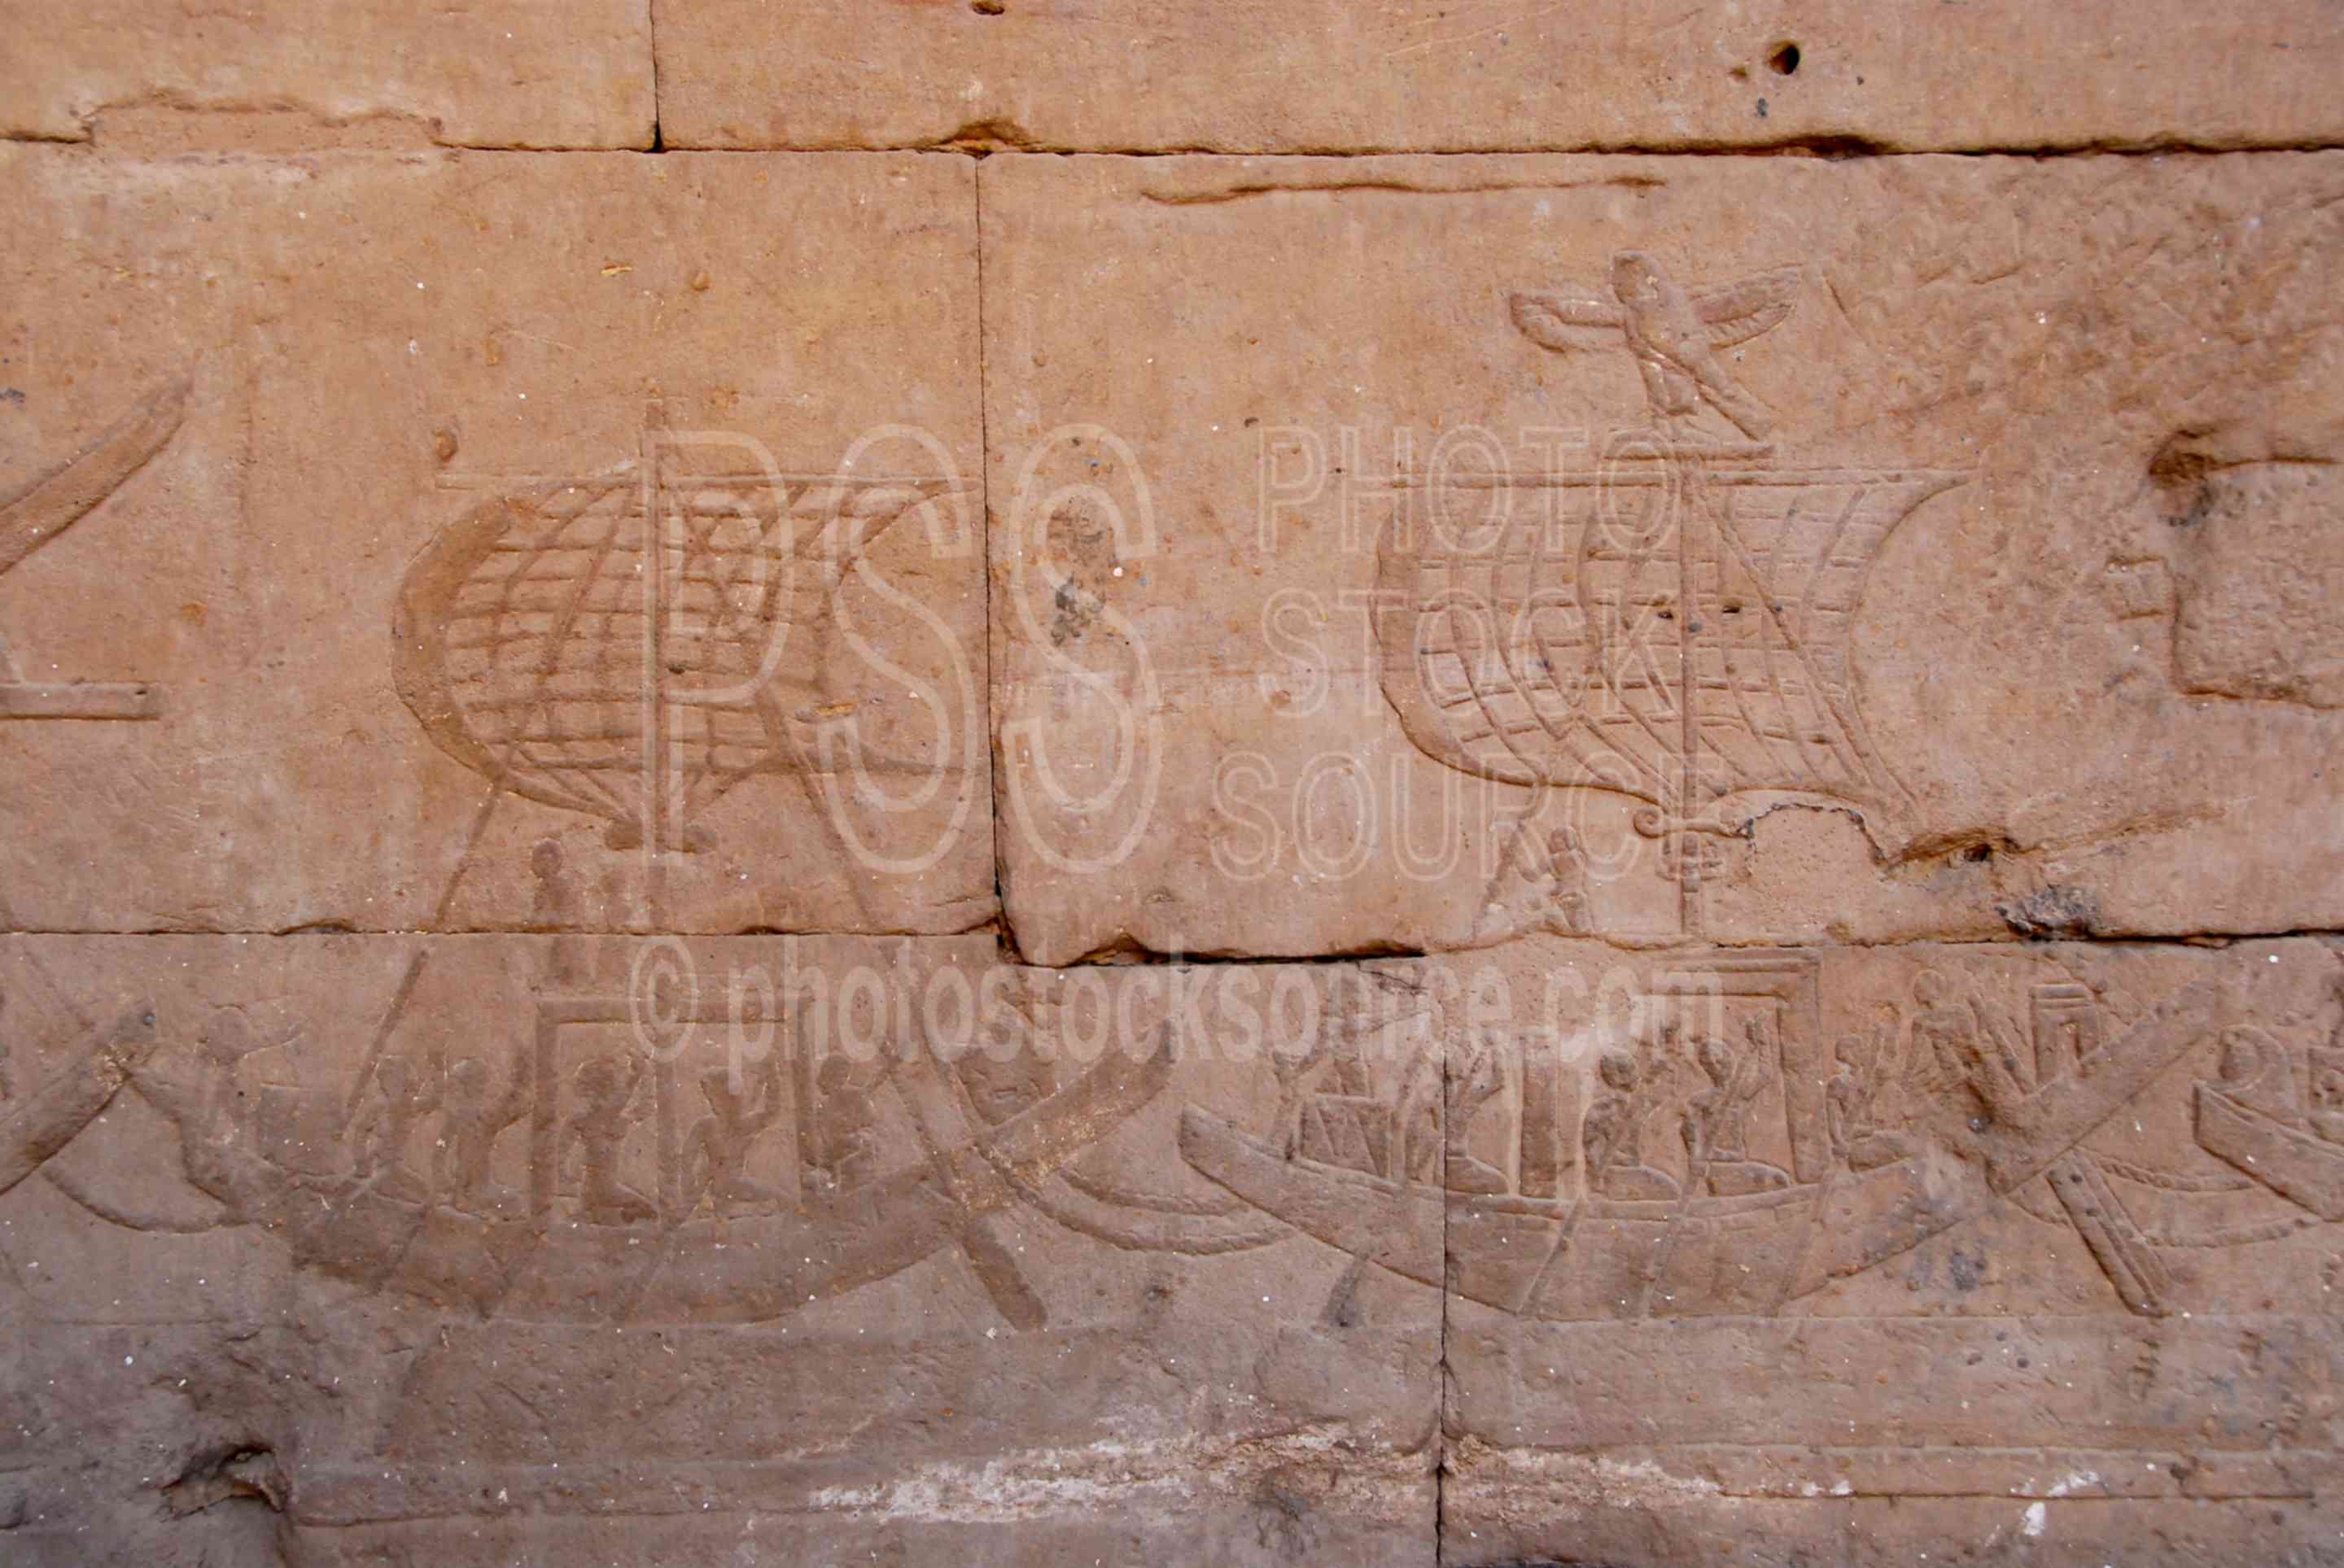 Courtyard Hieroglypics,temple,idfu,behdet,ptolemy,hieroglyphics,courtyard,temples